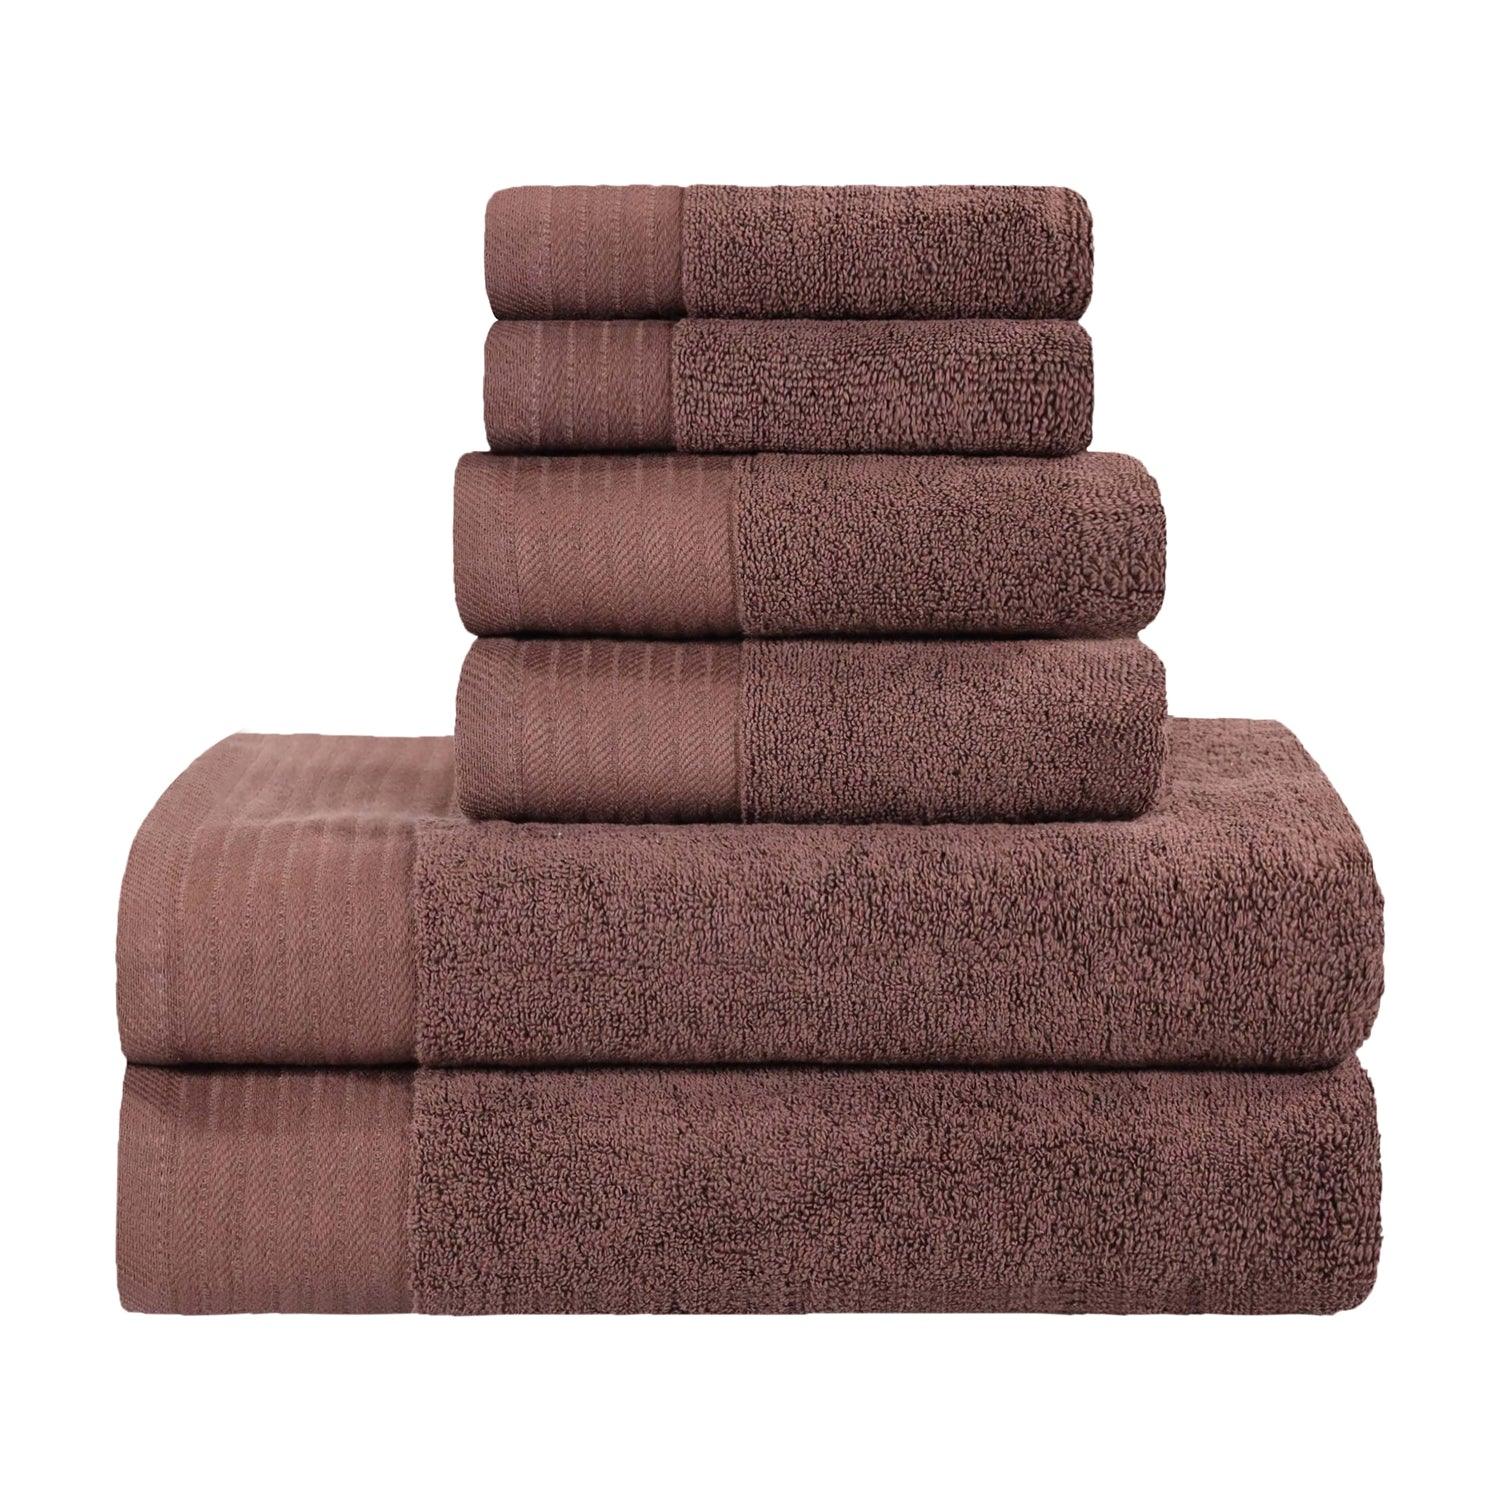 Premium Turkish Cotton Herringbone Solid Assorted 6-Piece Towel Set -  Chocolate